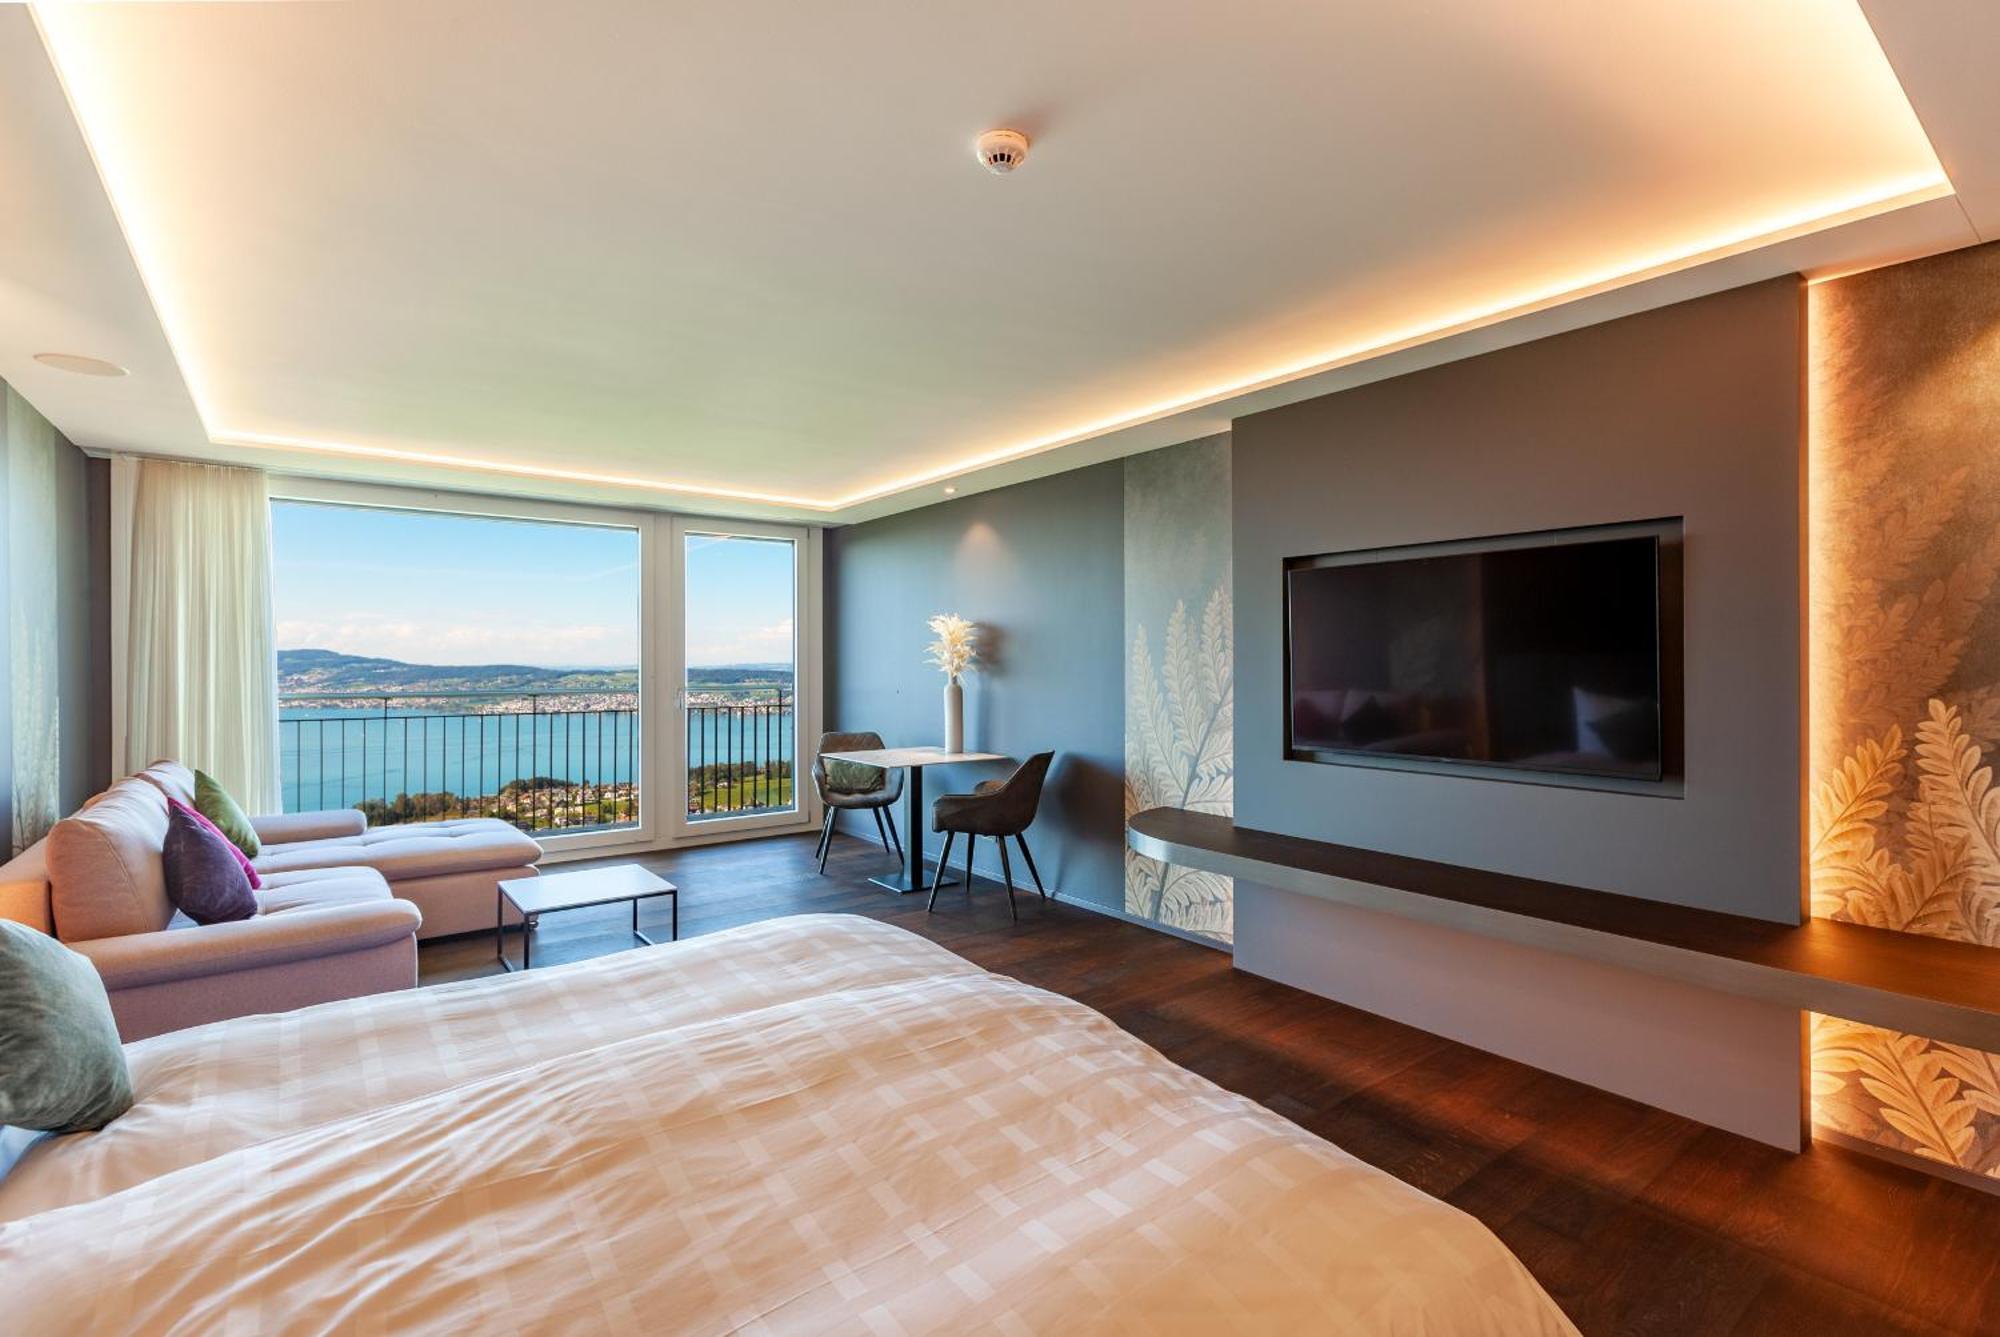 Panorama Resort & Spa Feusisberg Exterior photo